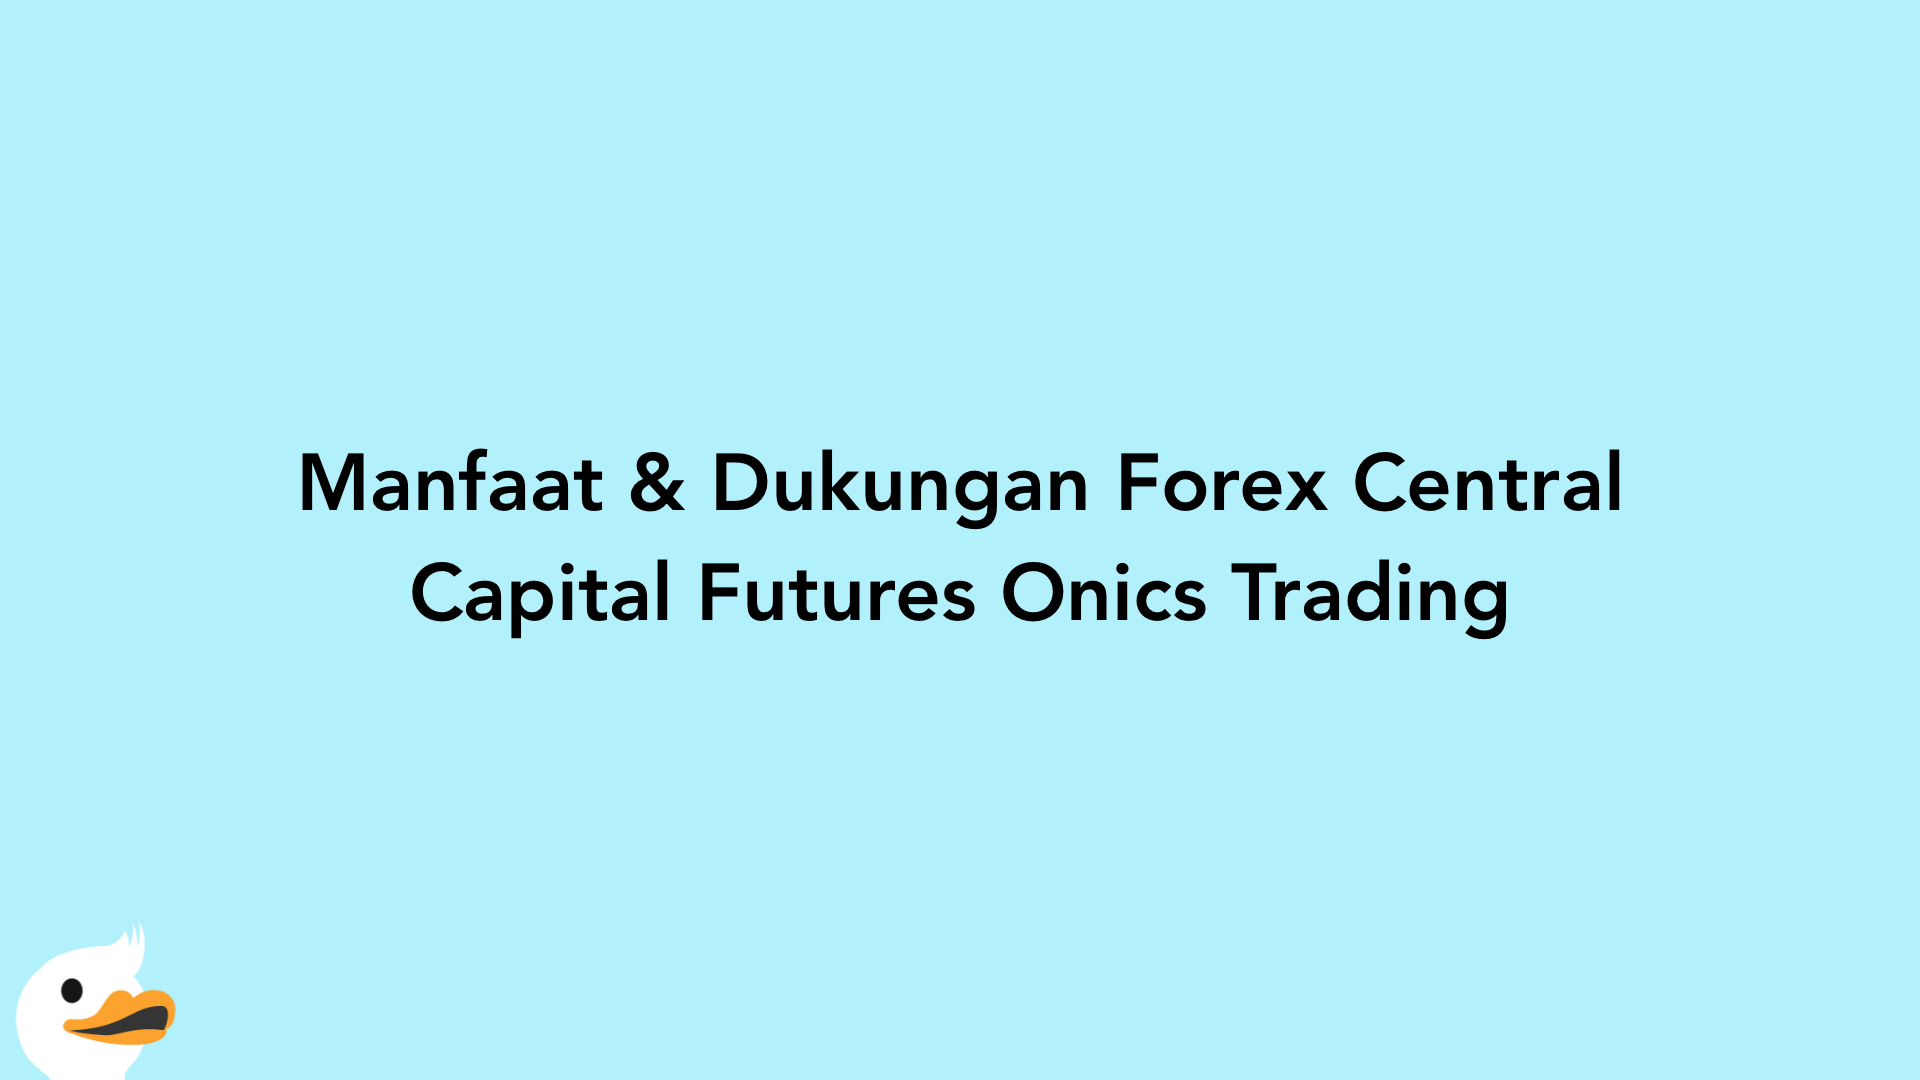 Manfaat & Dukungan Forex Central Capital Futures Onics Trading